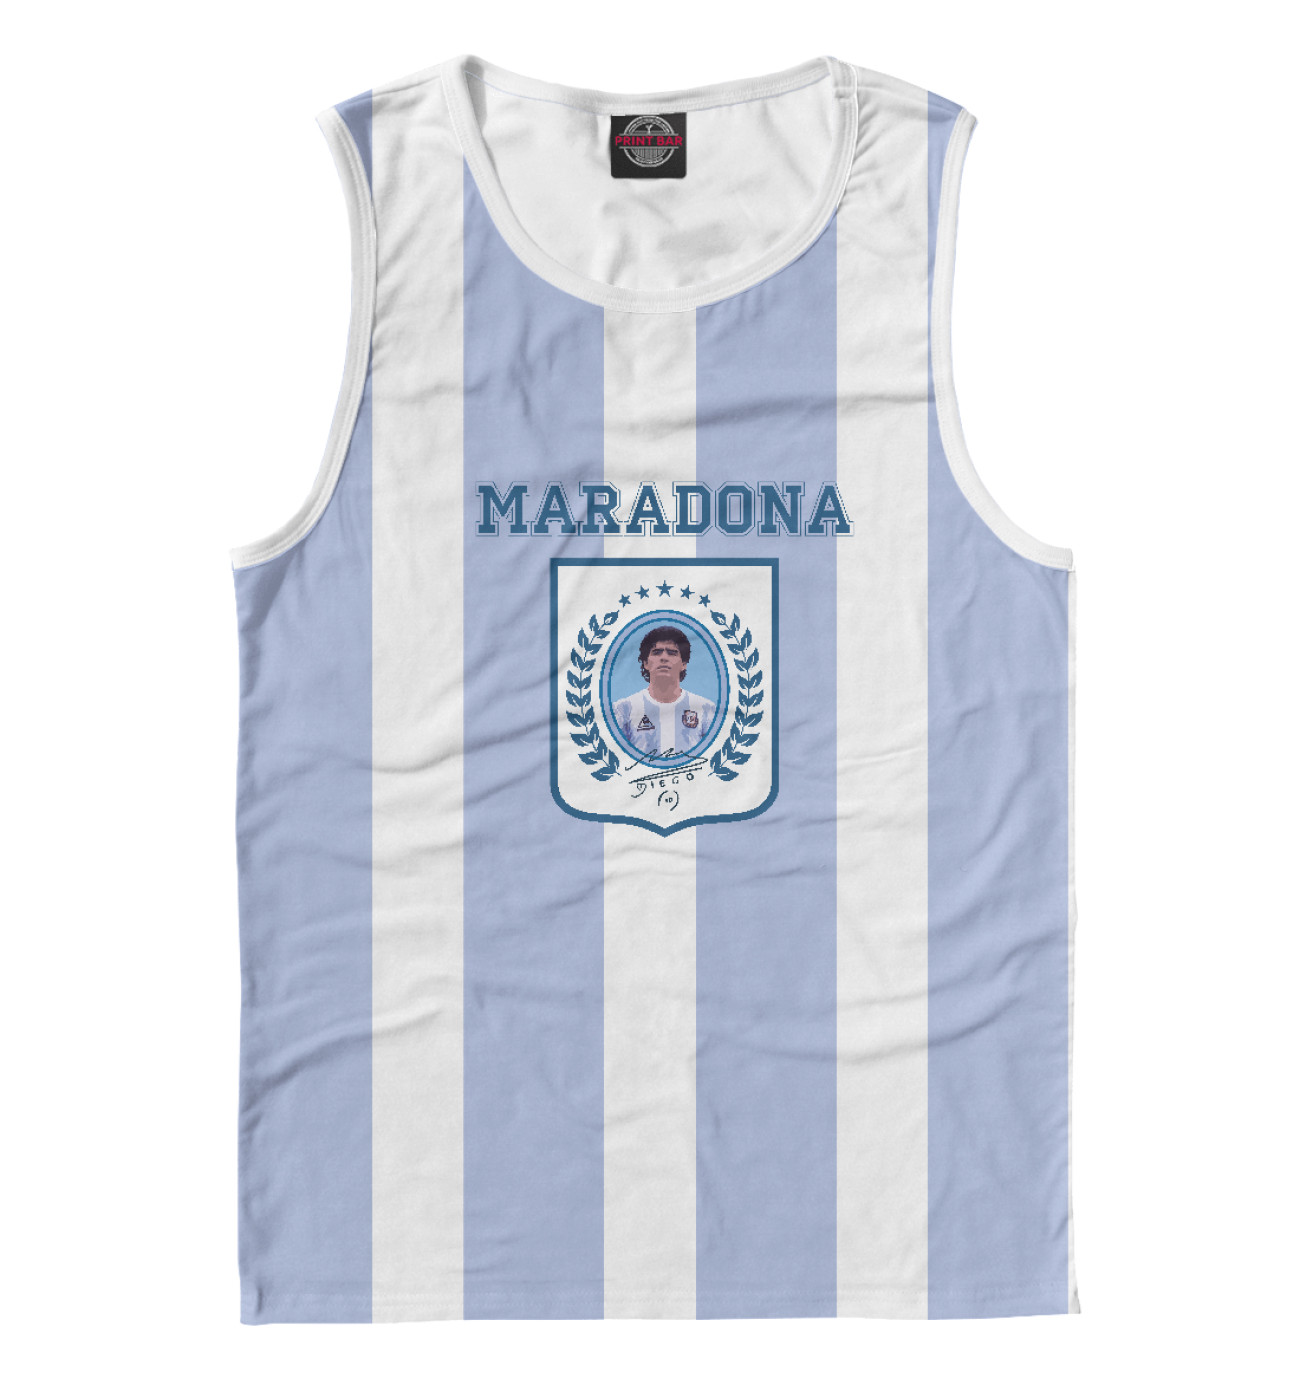 Мужская Майка Maradona, артикул: FTO-660229-may-2